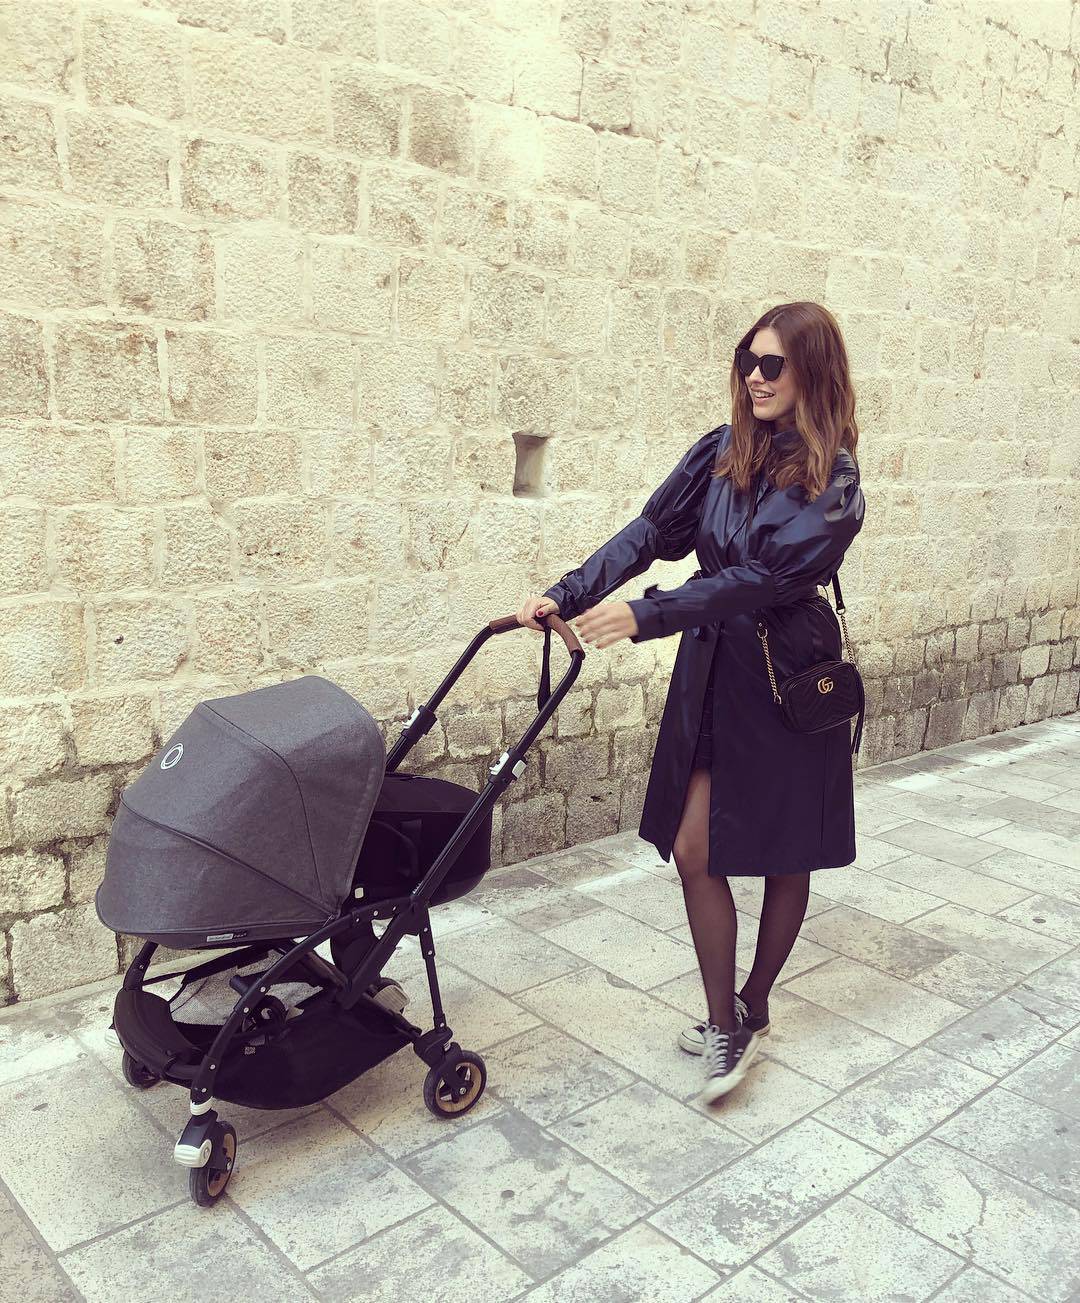 Mame u šetnji: Nataša i Anita modno se uskladile s bebama